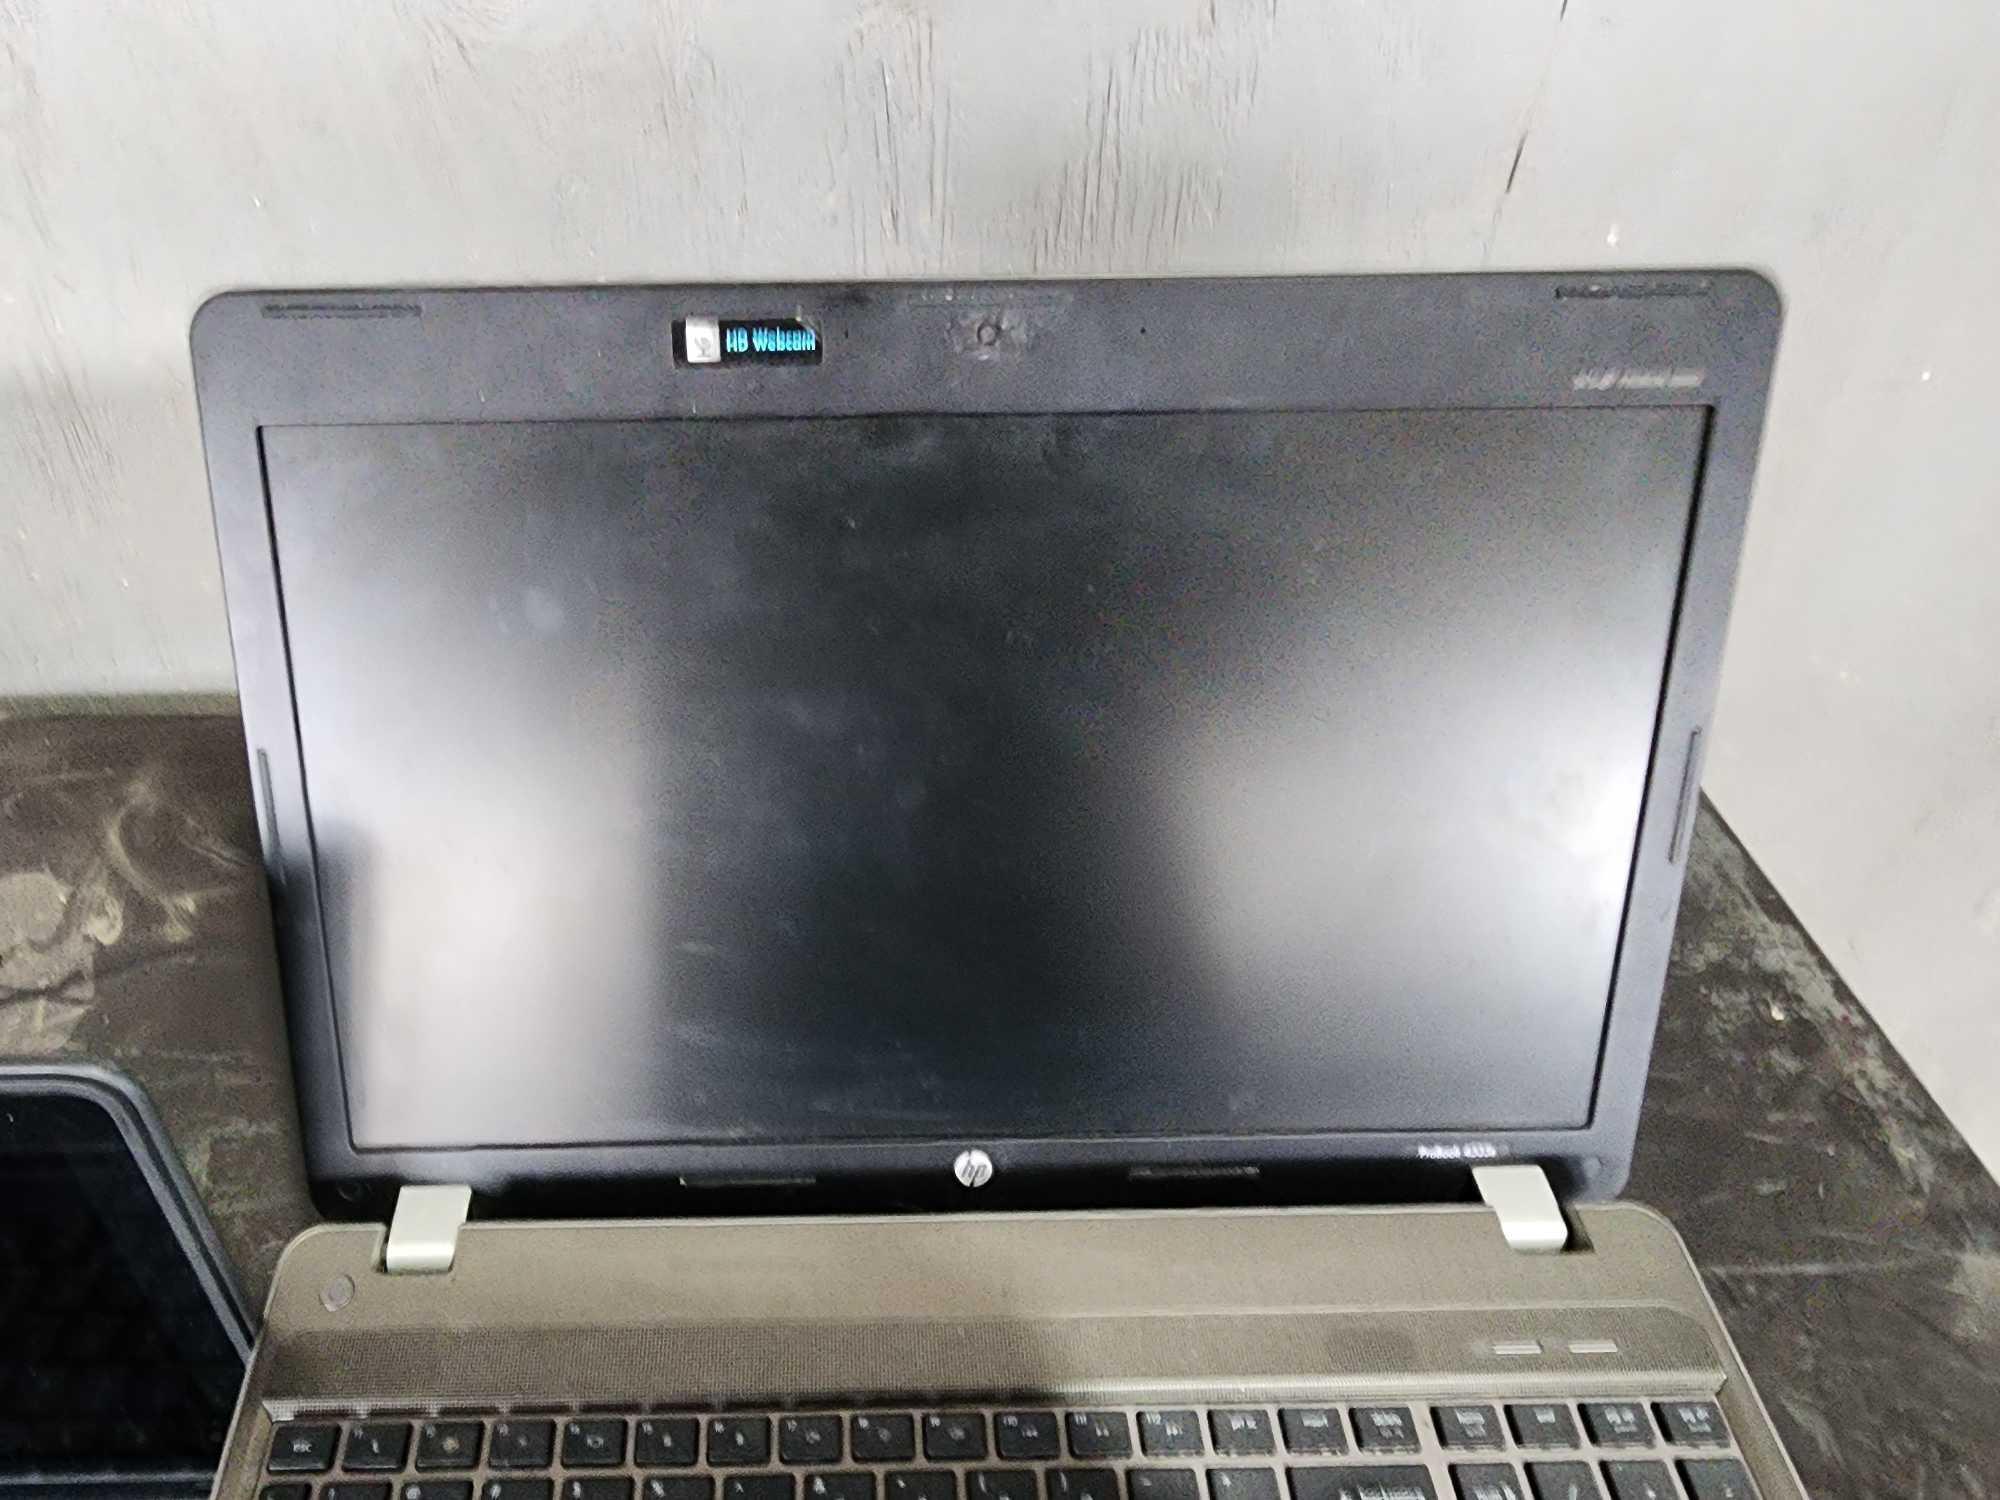 (1) Dell Laptop, (3) HP Probook Laptops